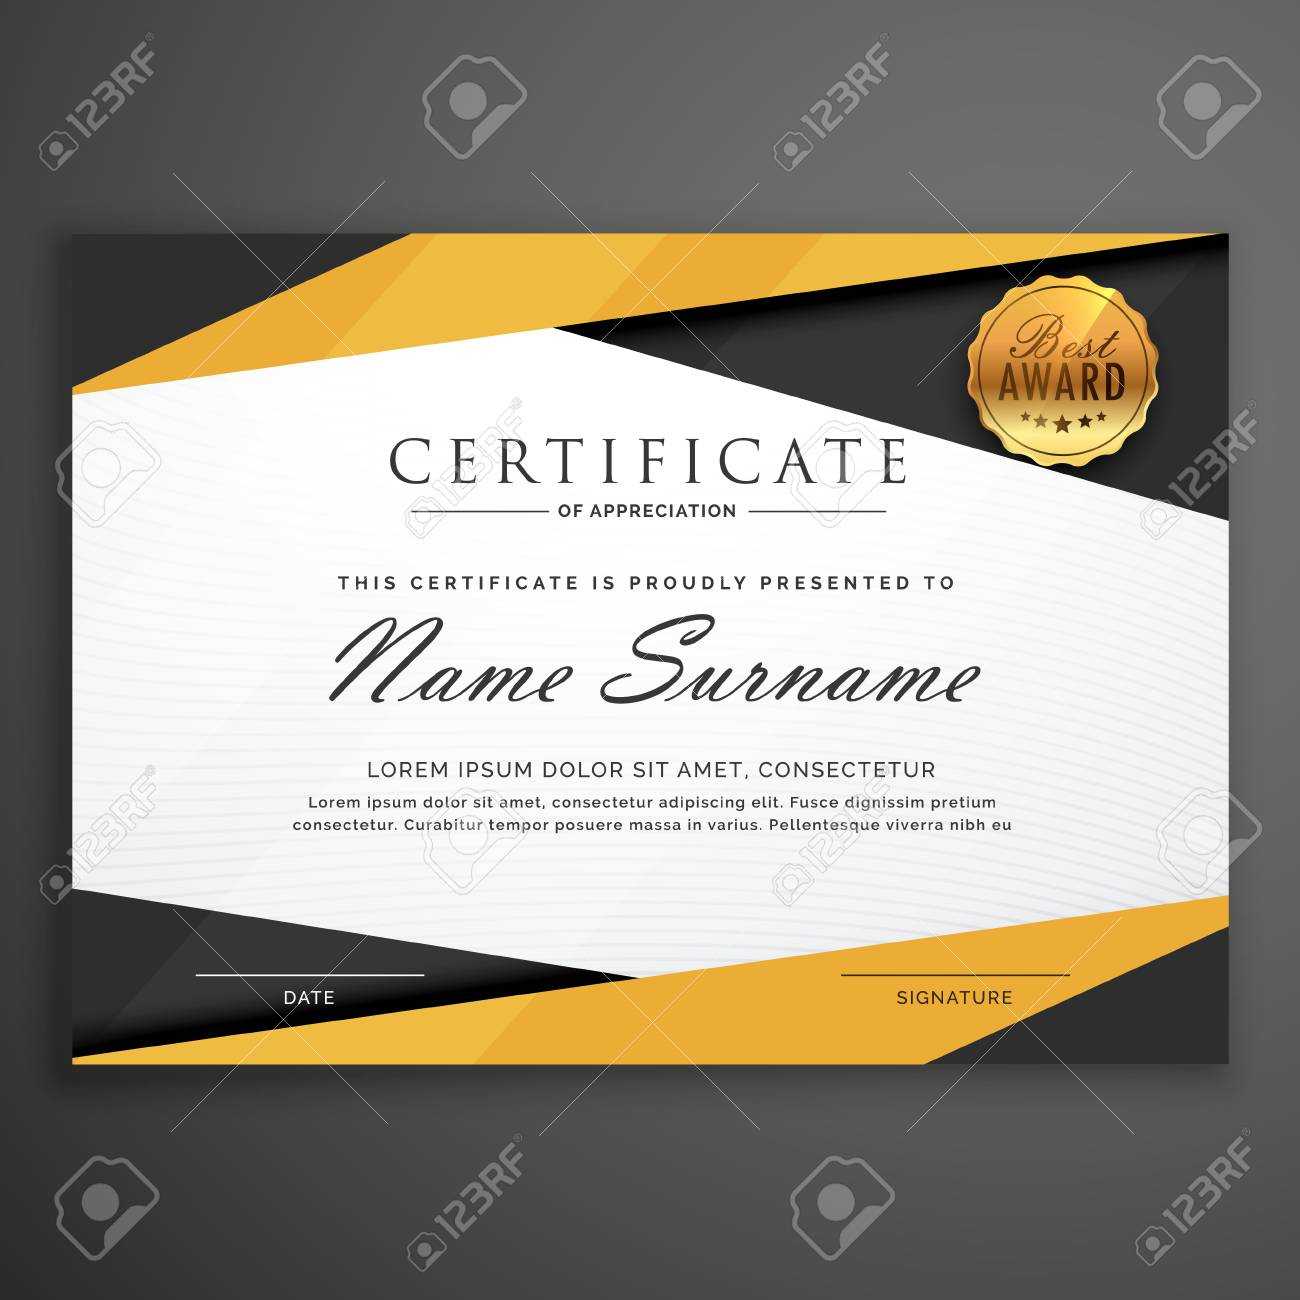 Yellow And Black Geometric Certificate Award Design Template With Award Certificate Design Template